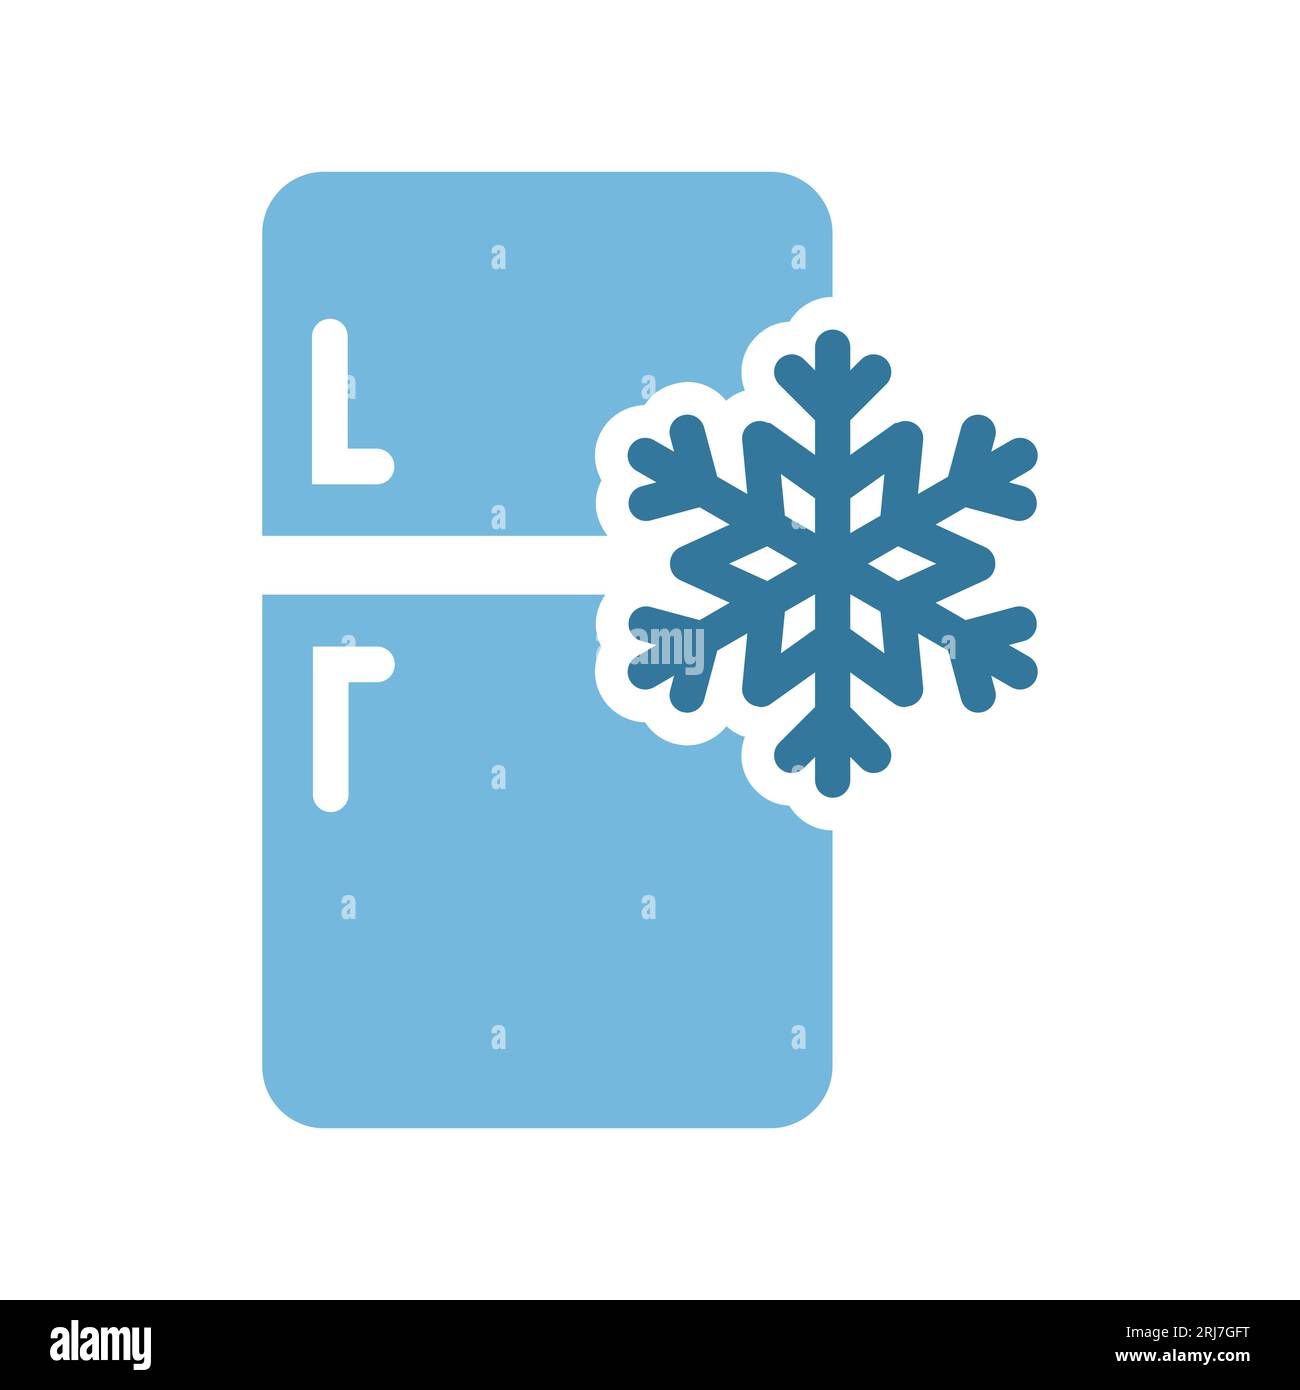 Fridge black isolated vector icon. Refrigerator and freezer symbol with snowflake. Stock Vector